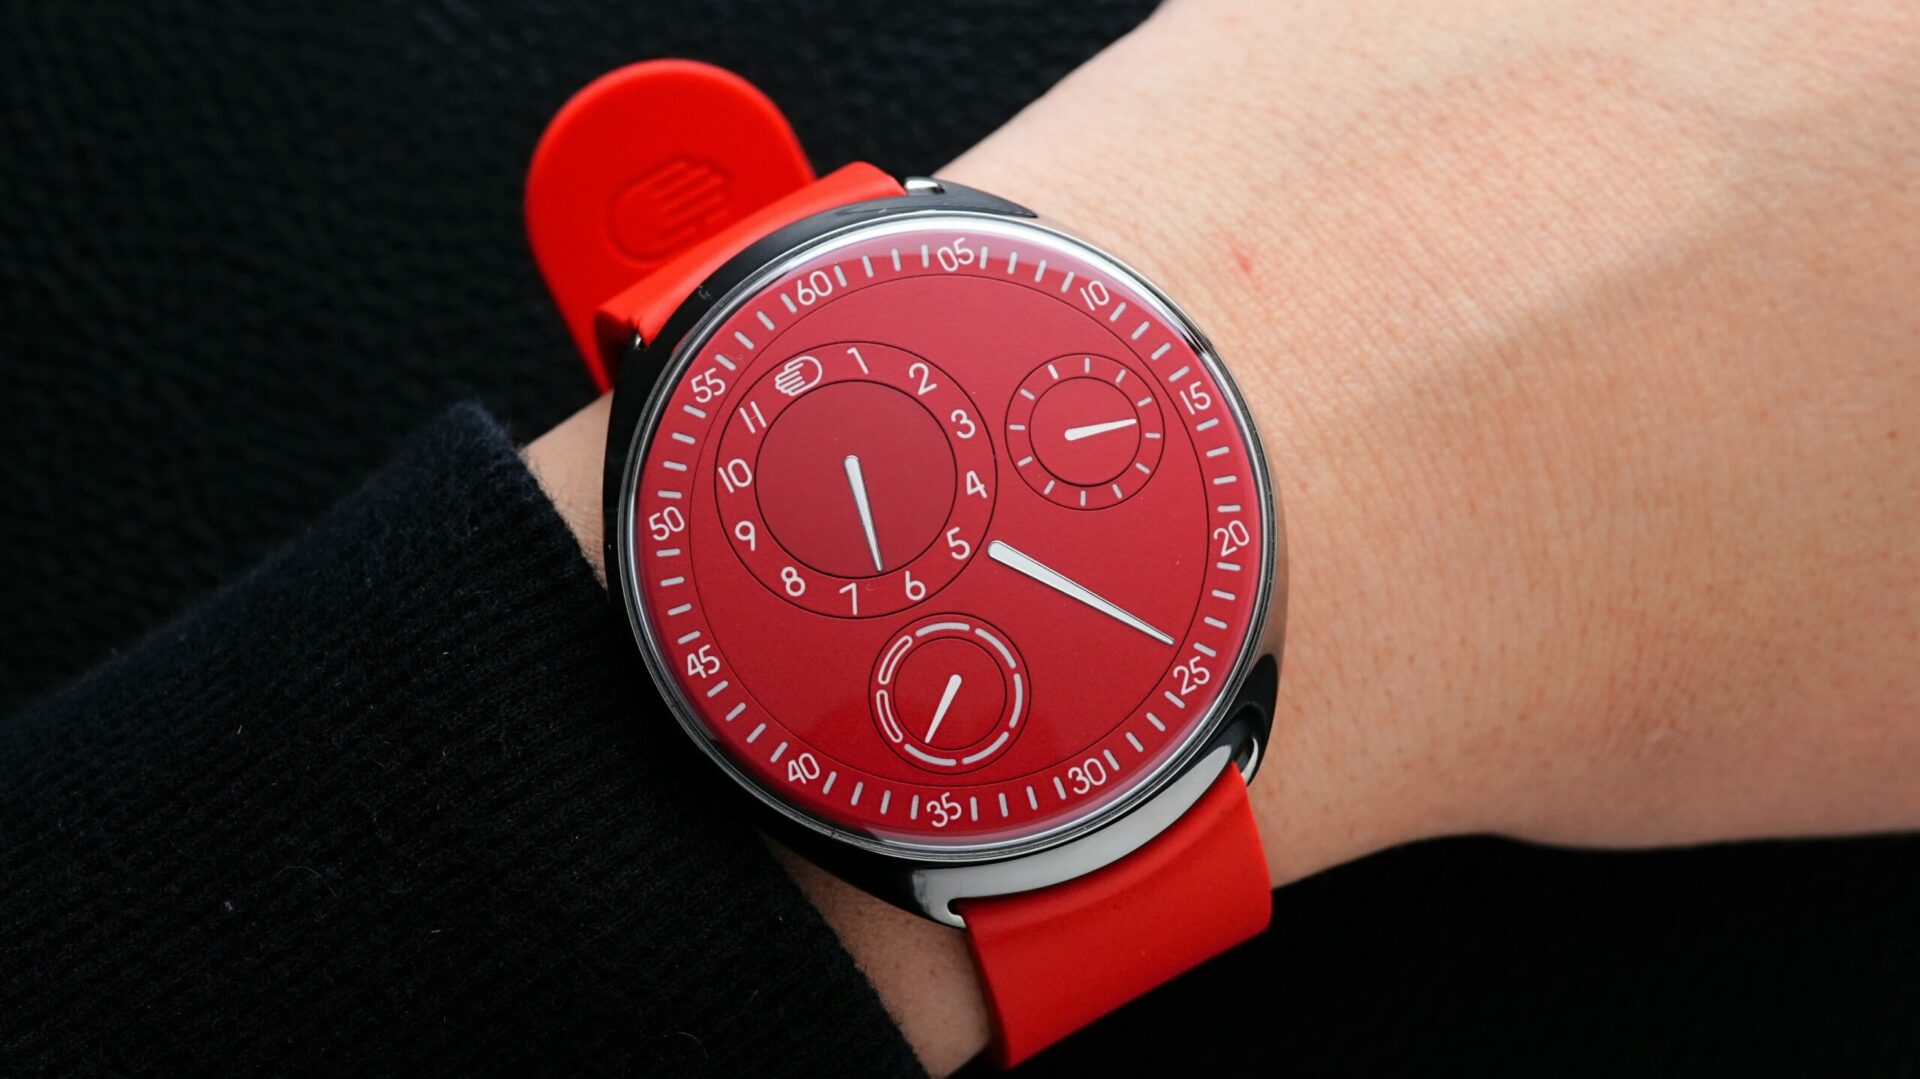 Ressence Type 1 Red Slim displayed on the wrist.